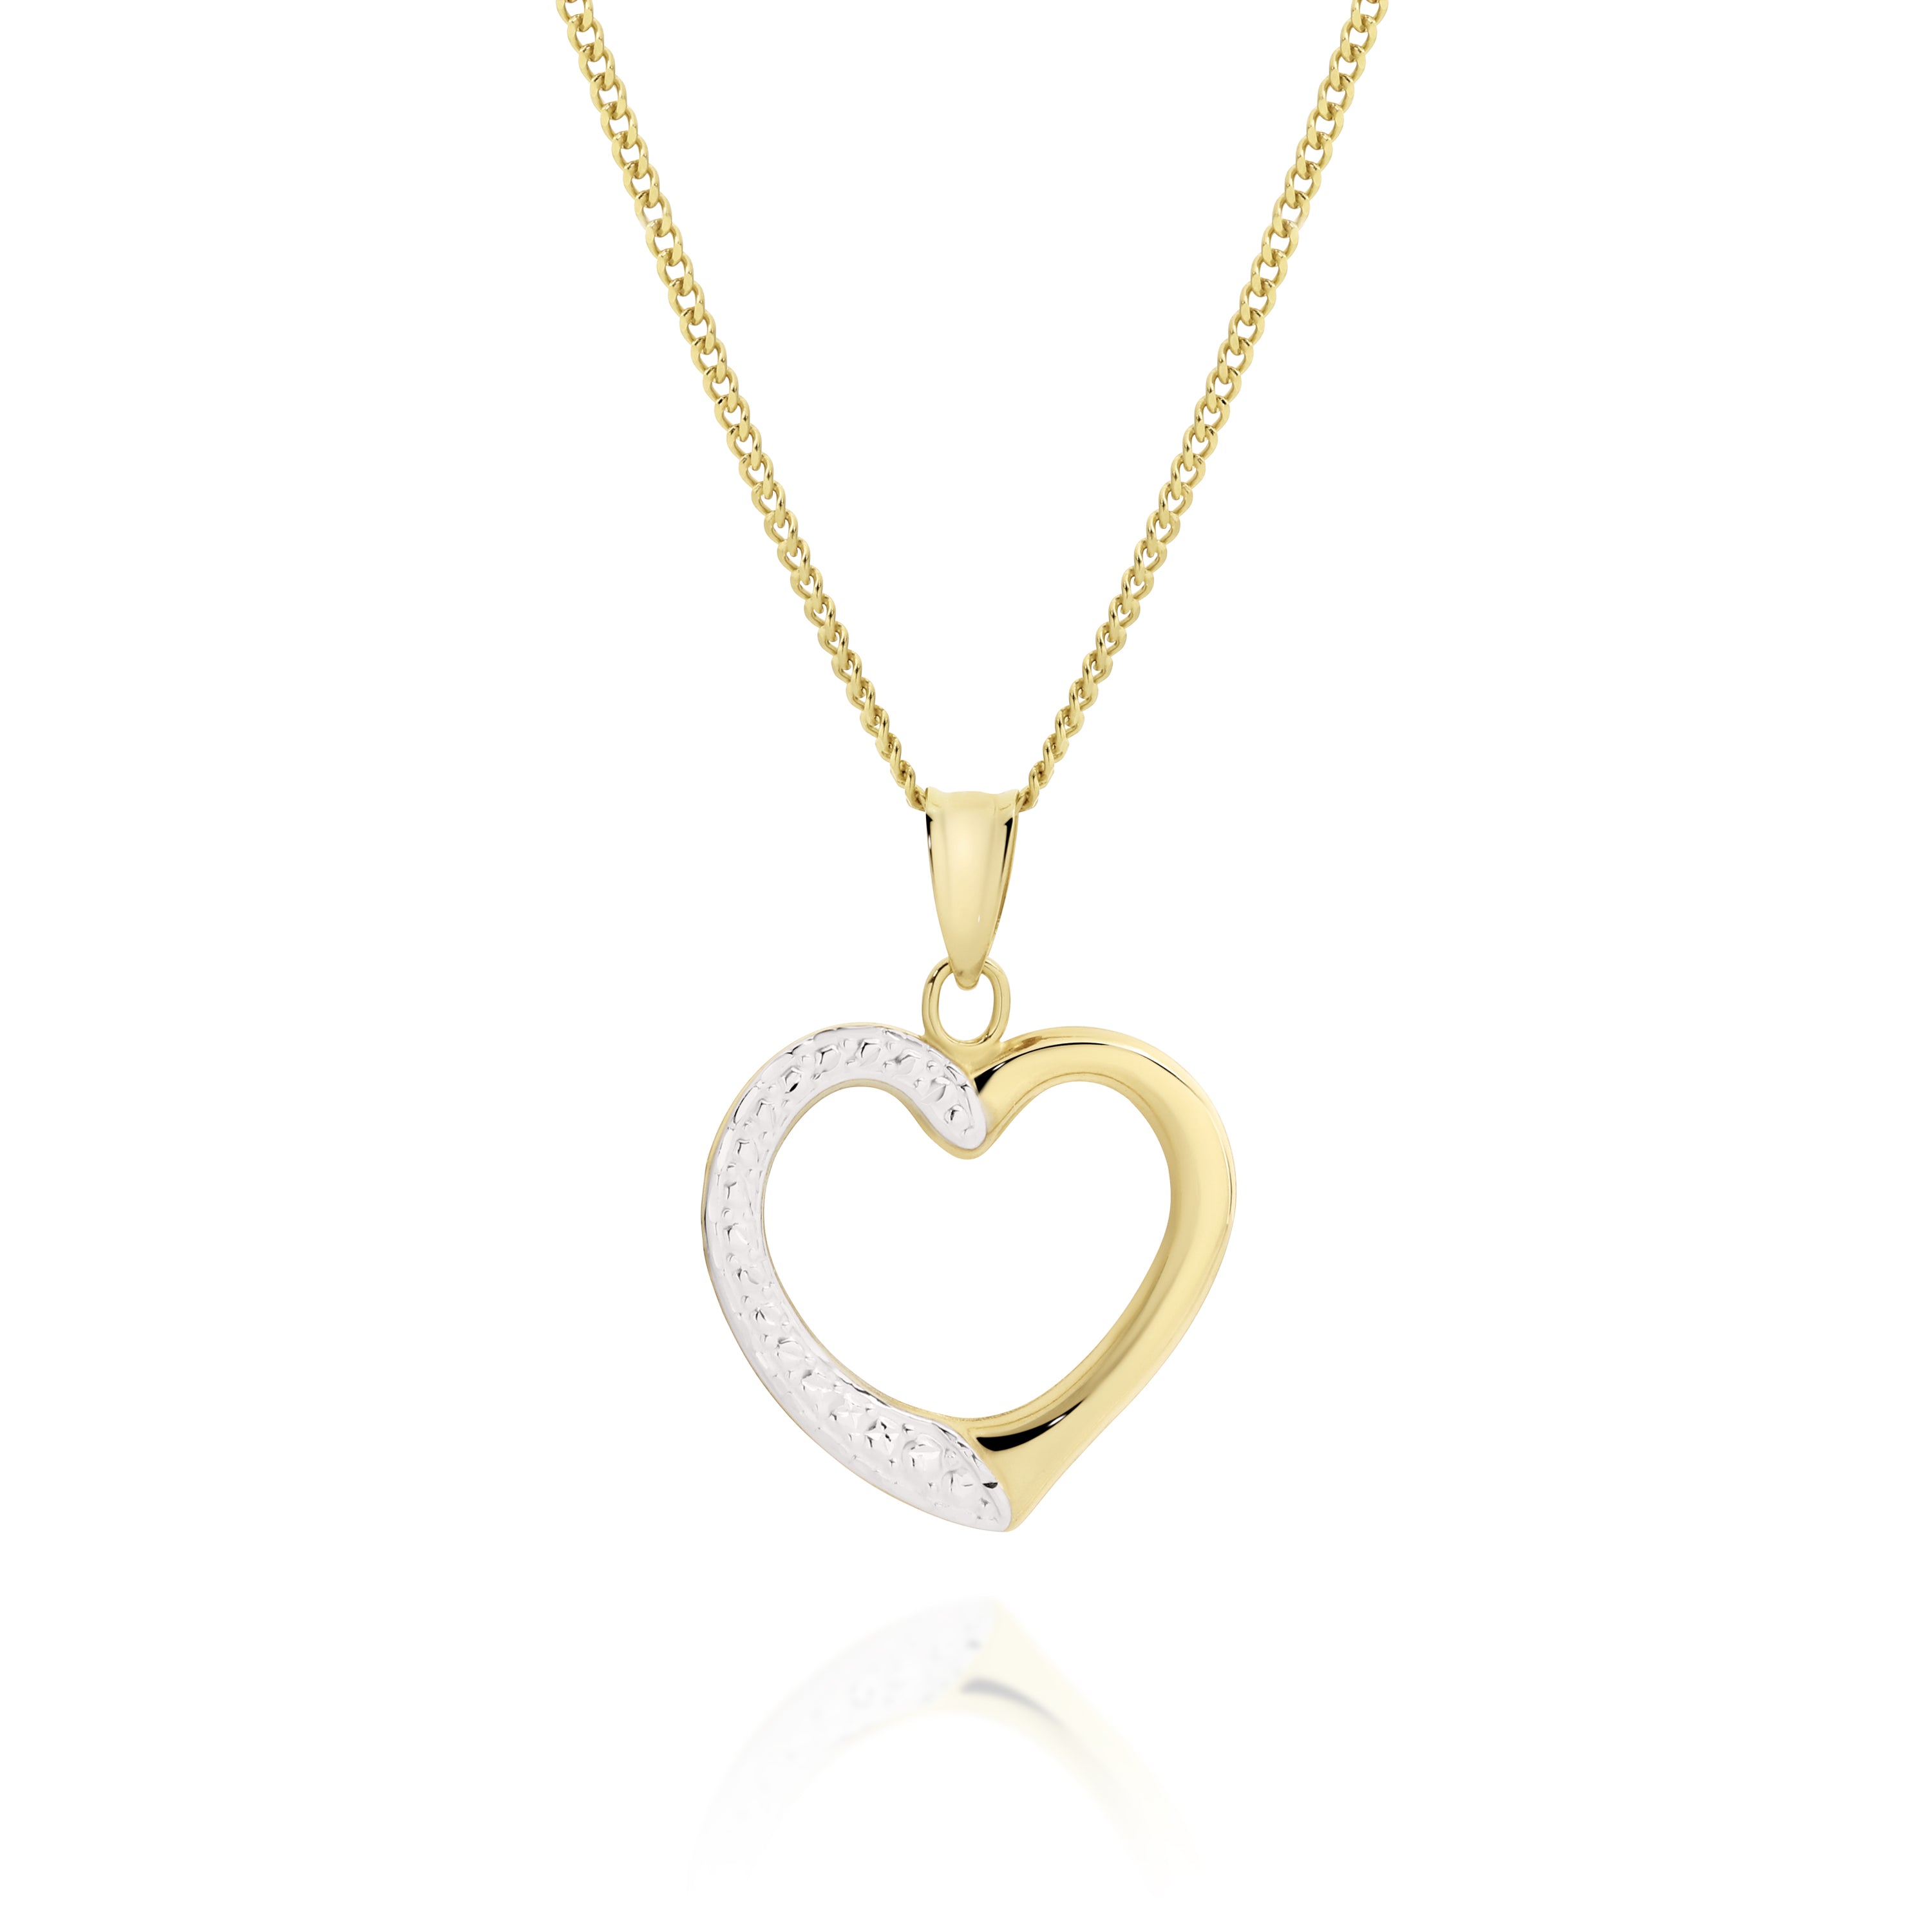 9ct gold heart pendant